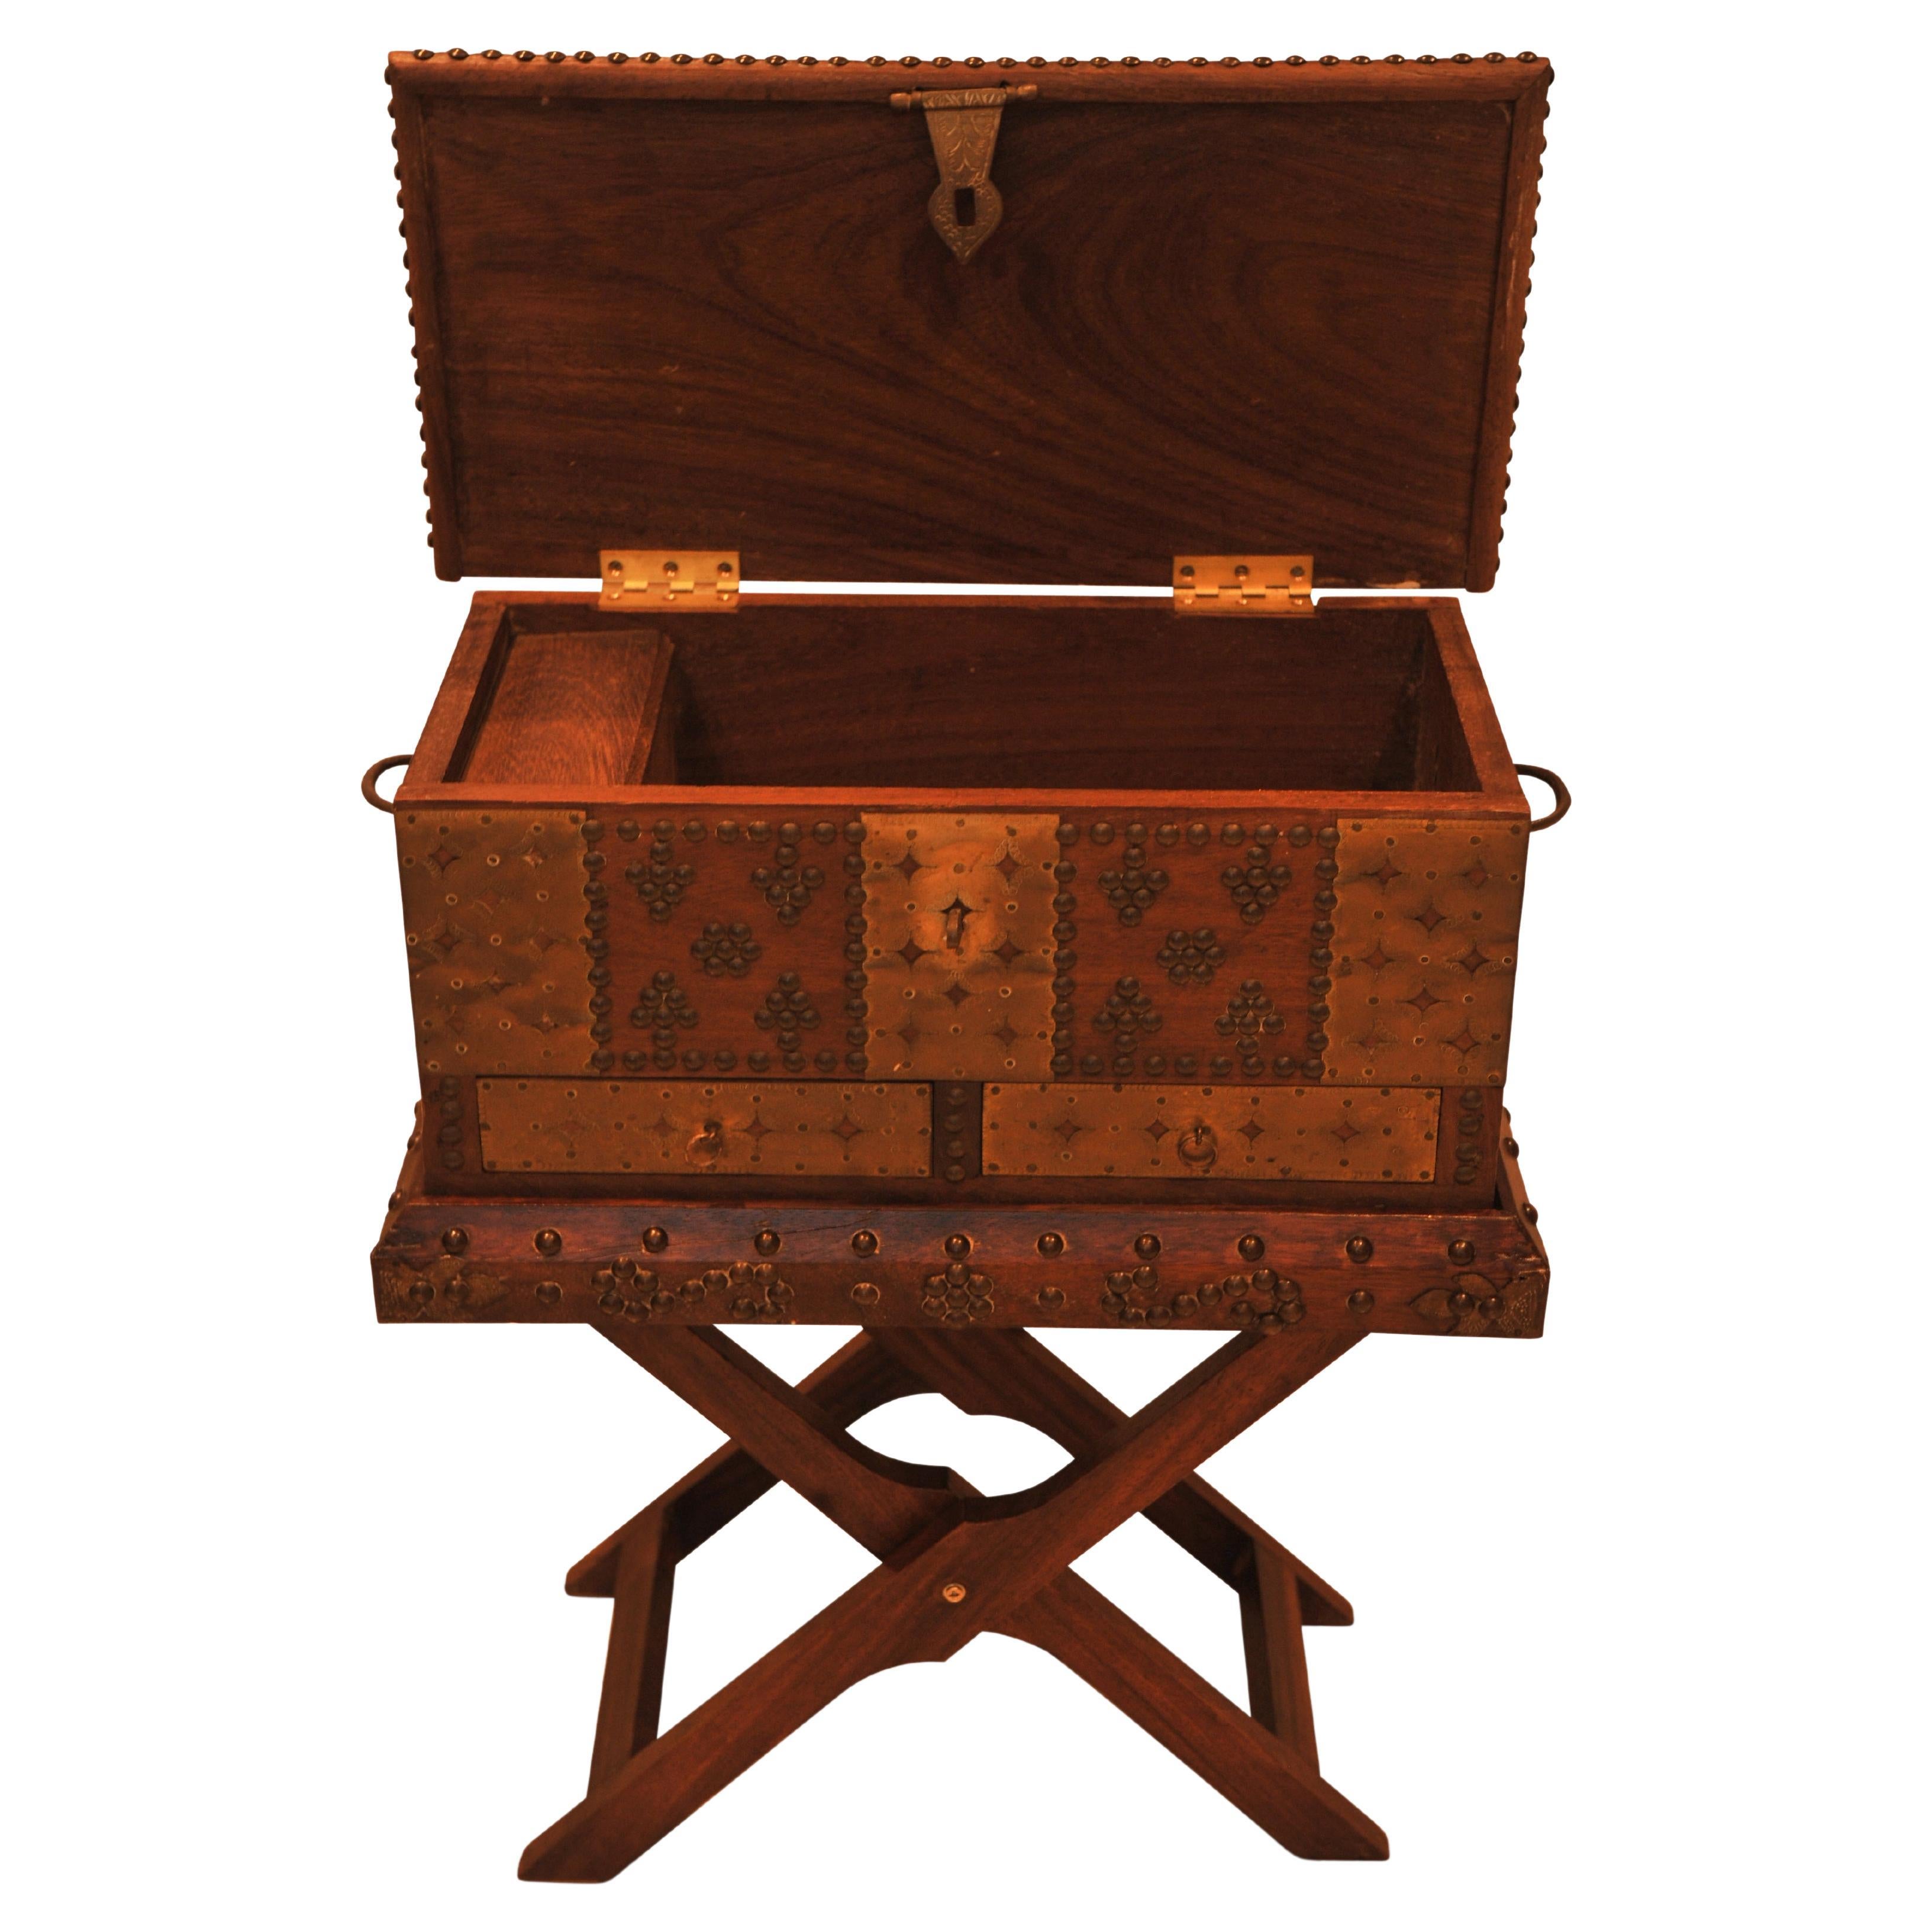 A 19th Century Moorish Zanzibar Brass & Hardwood Decorative Box on Matching Folding Brass Studded Stand

Extra dimensions 
without stand
Height: 21cm
Width: 48.5cm
Depth: 24.5cm 